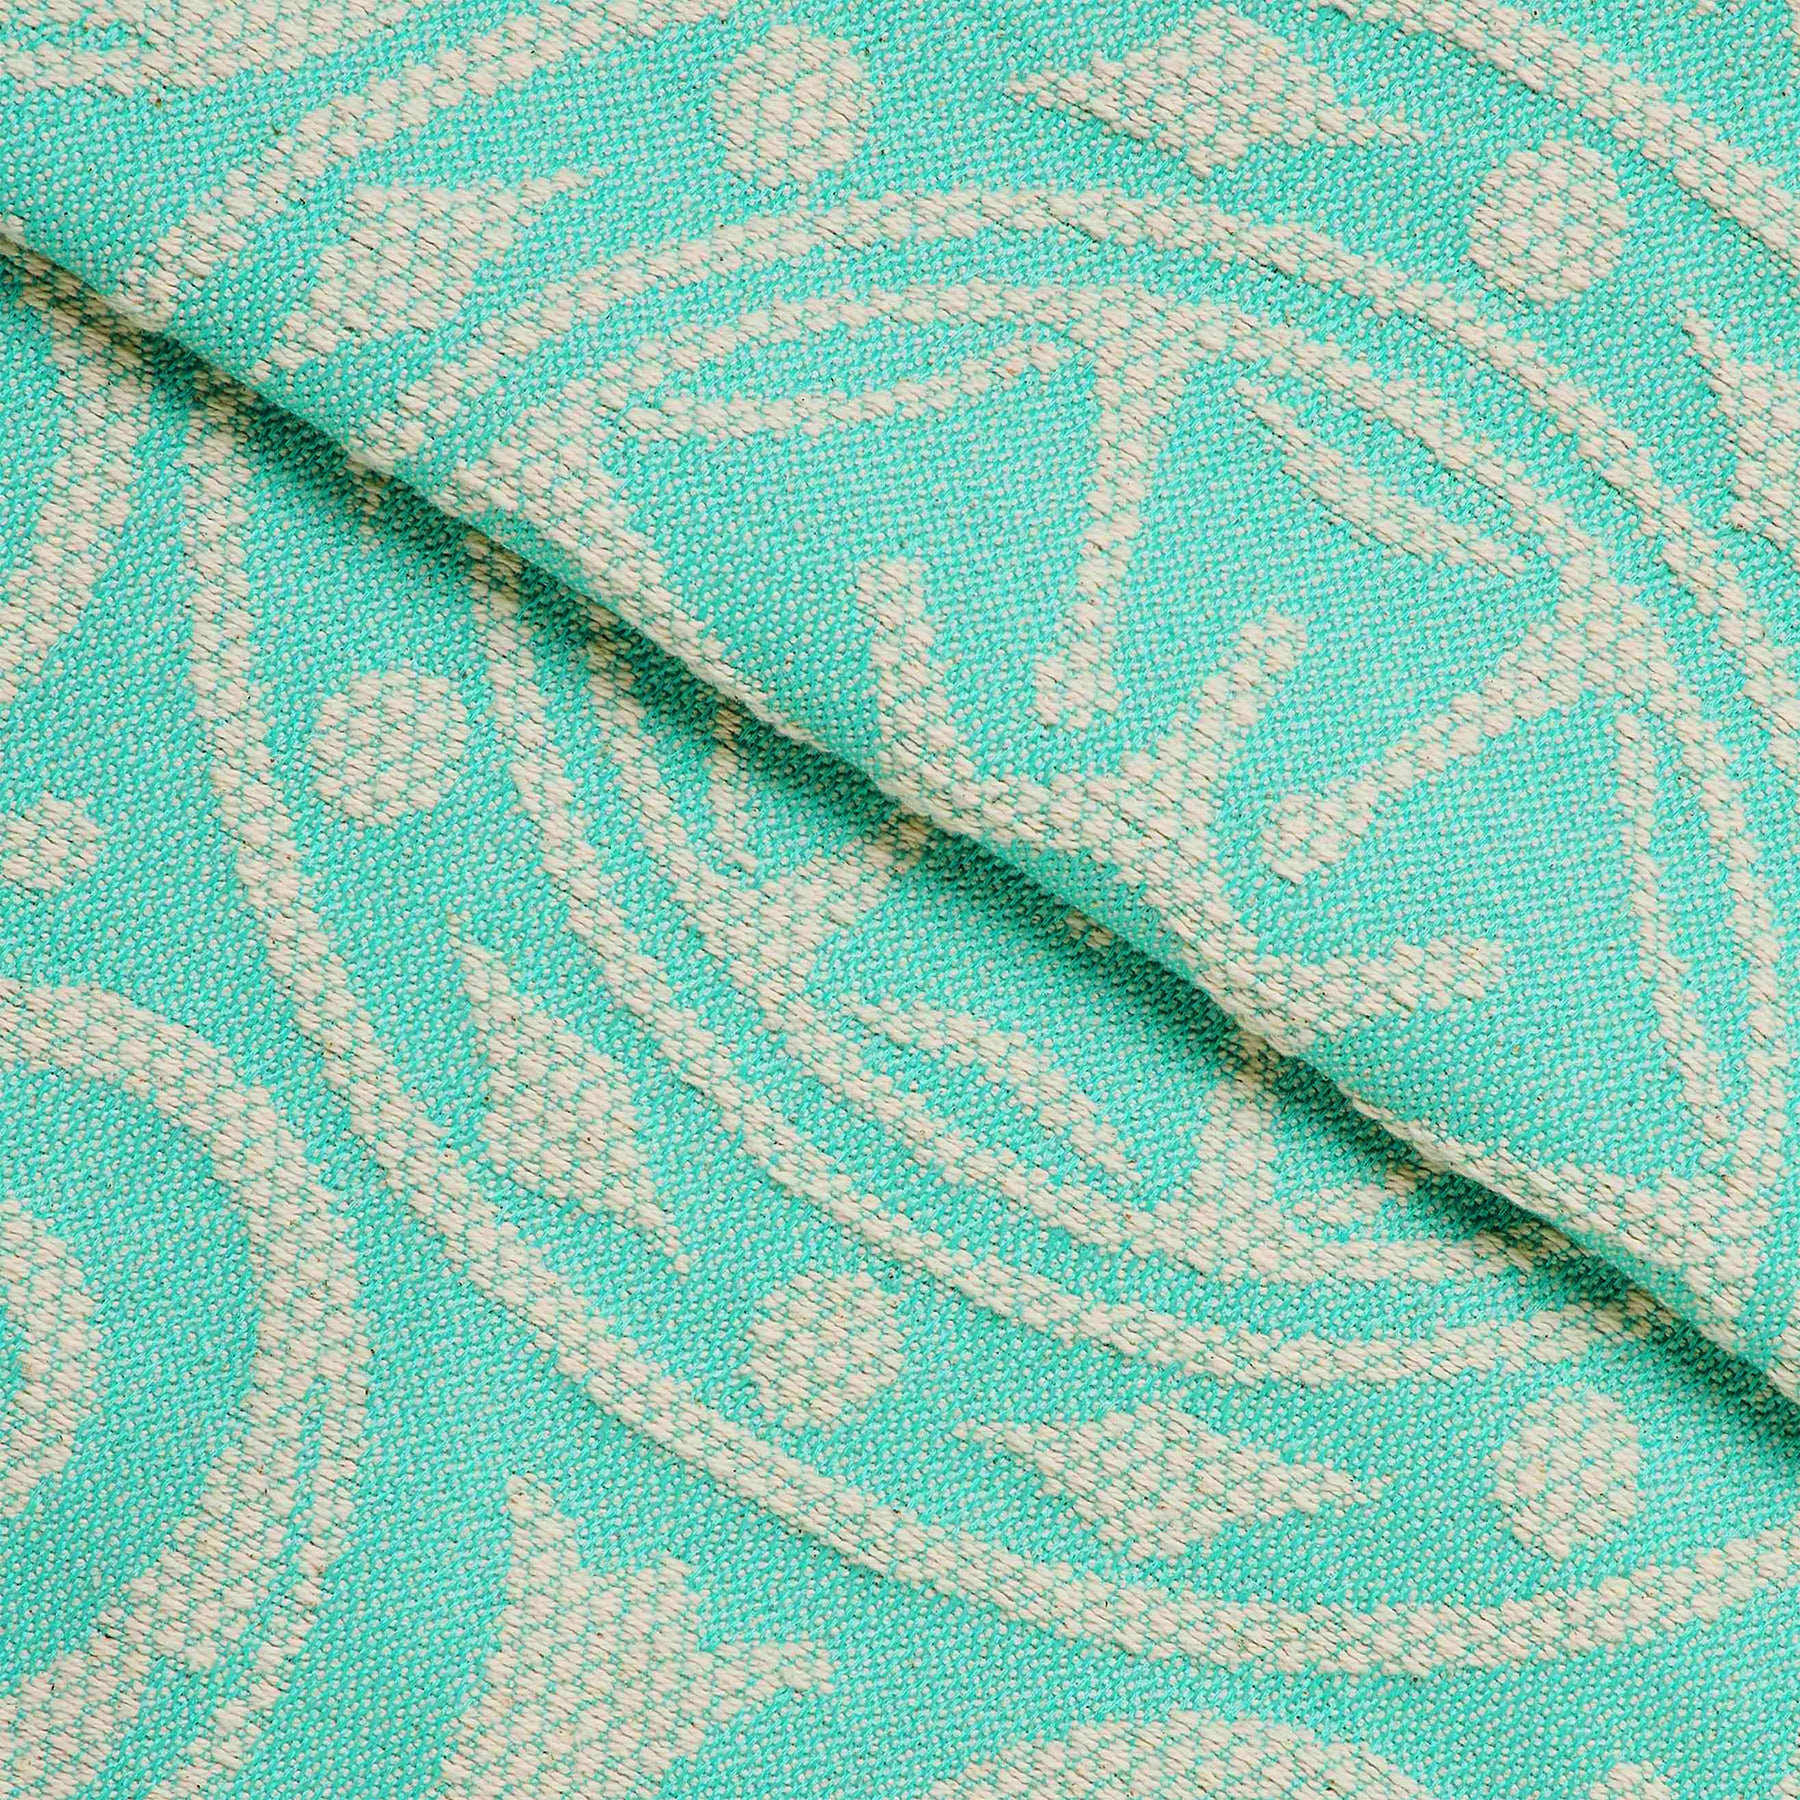 Superior Adalie Cotton Blend Woven Jacquard Vintage Medallion Lightweight Bedspread and Sham Set - Turquoise